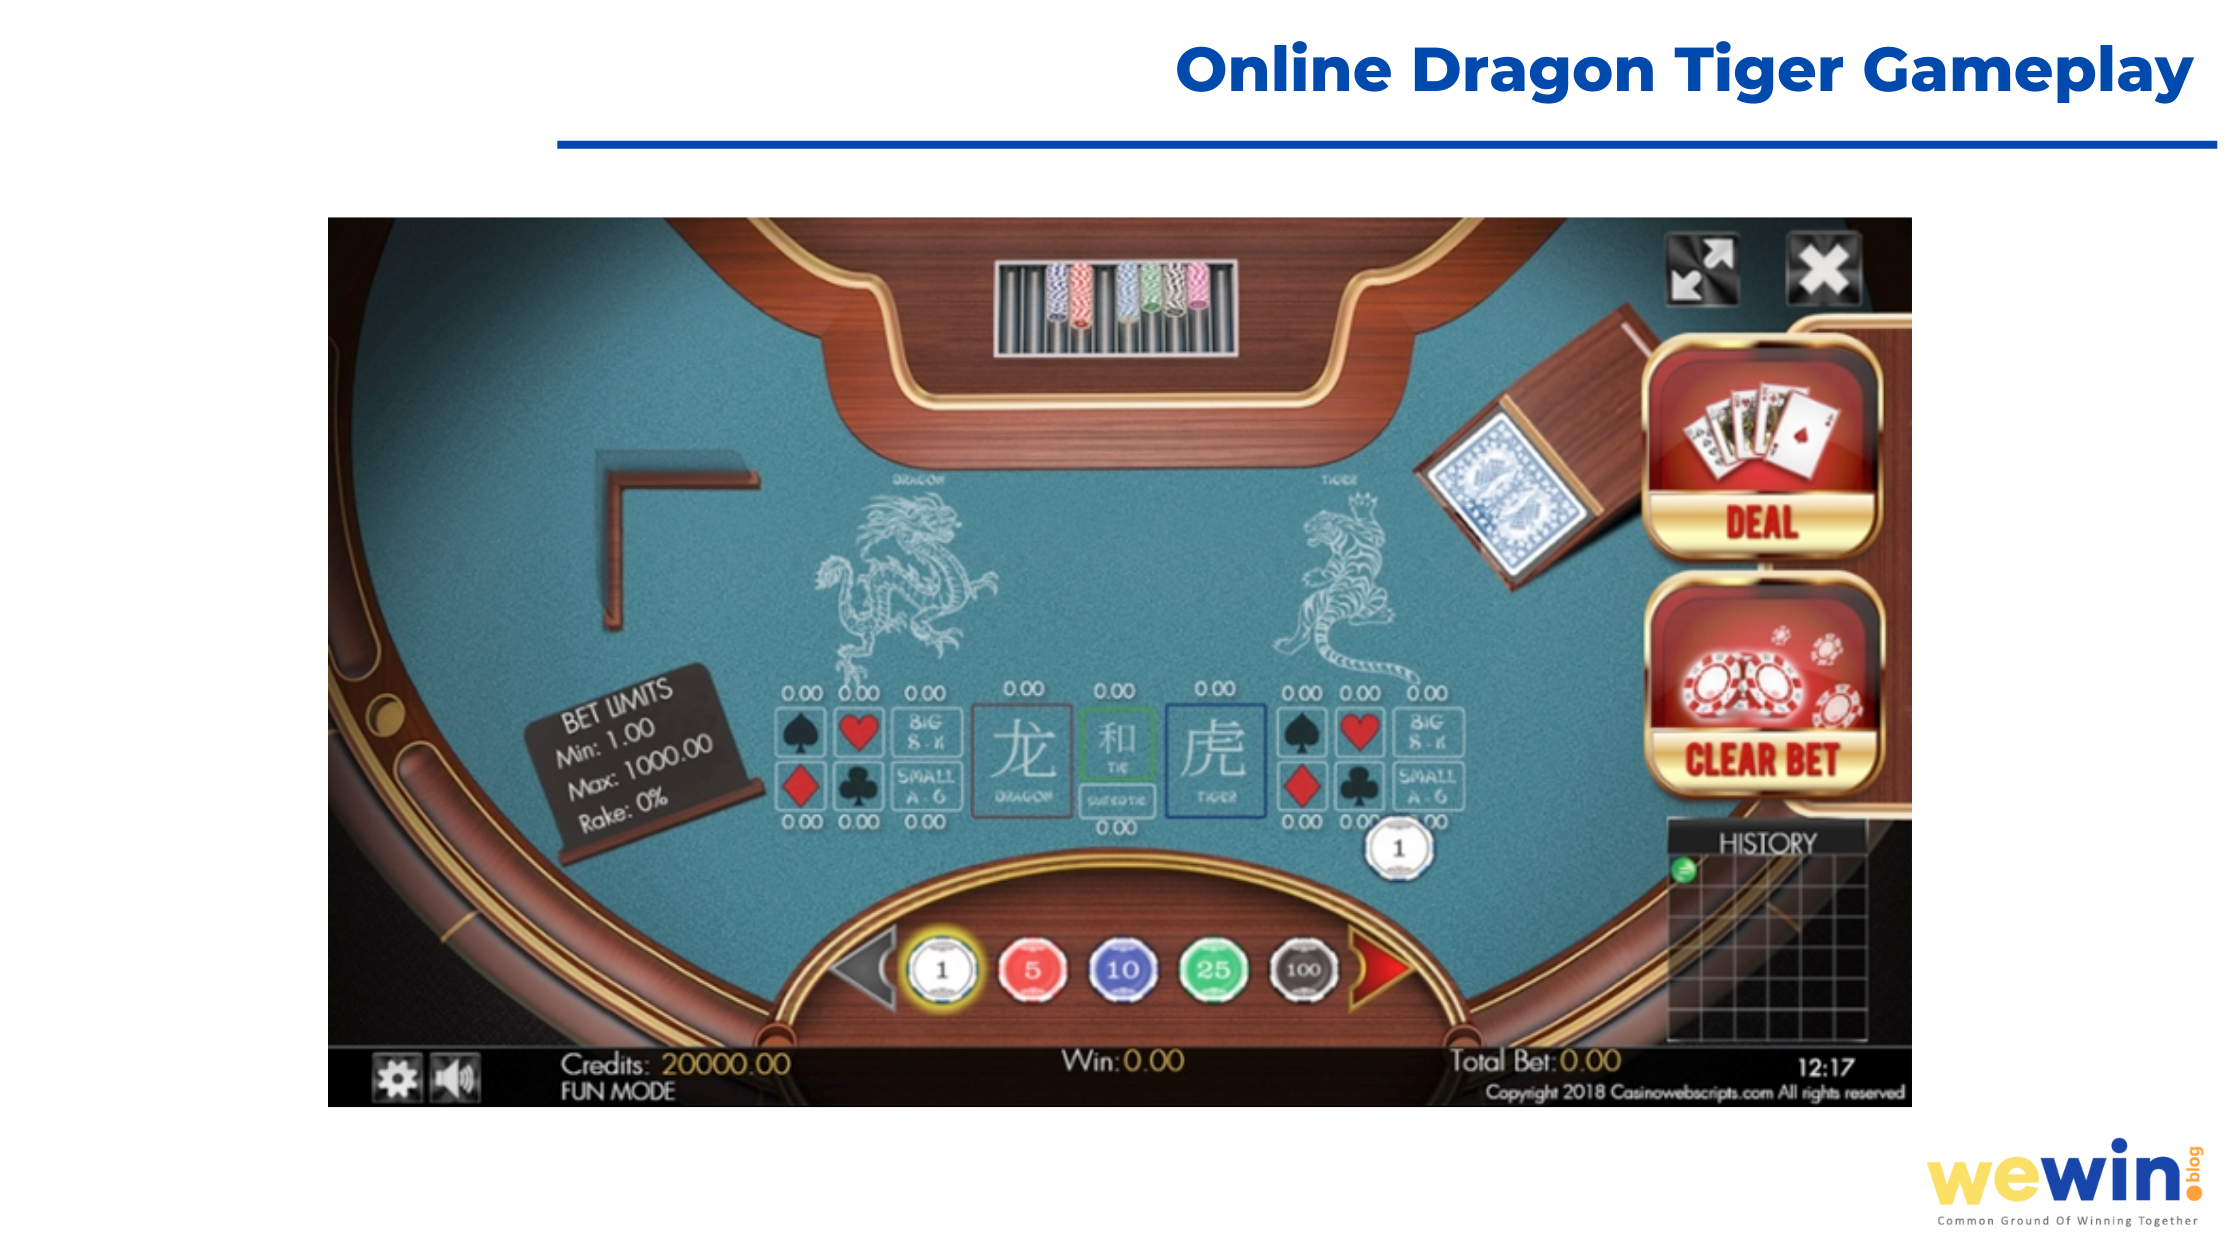 Dragon Tiger Online Gameplay